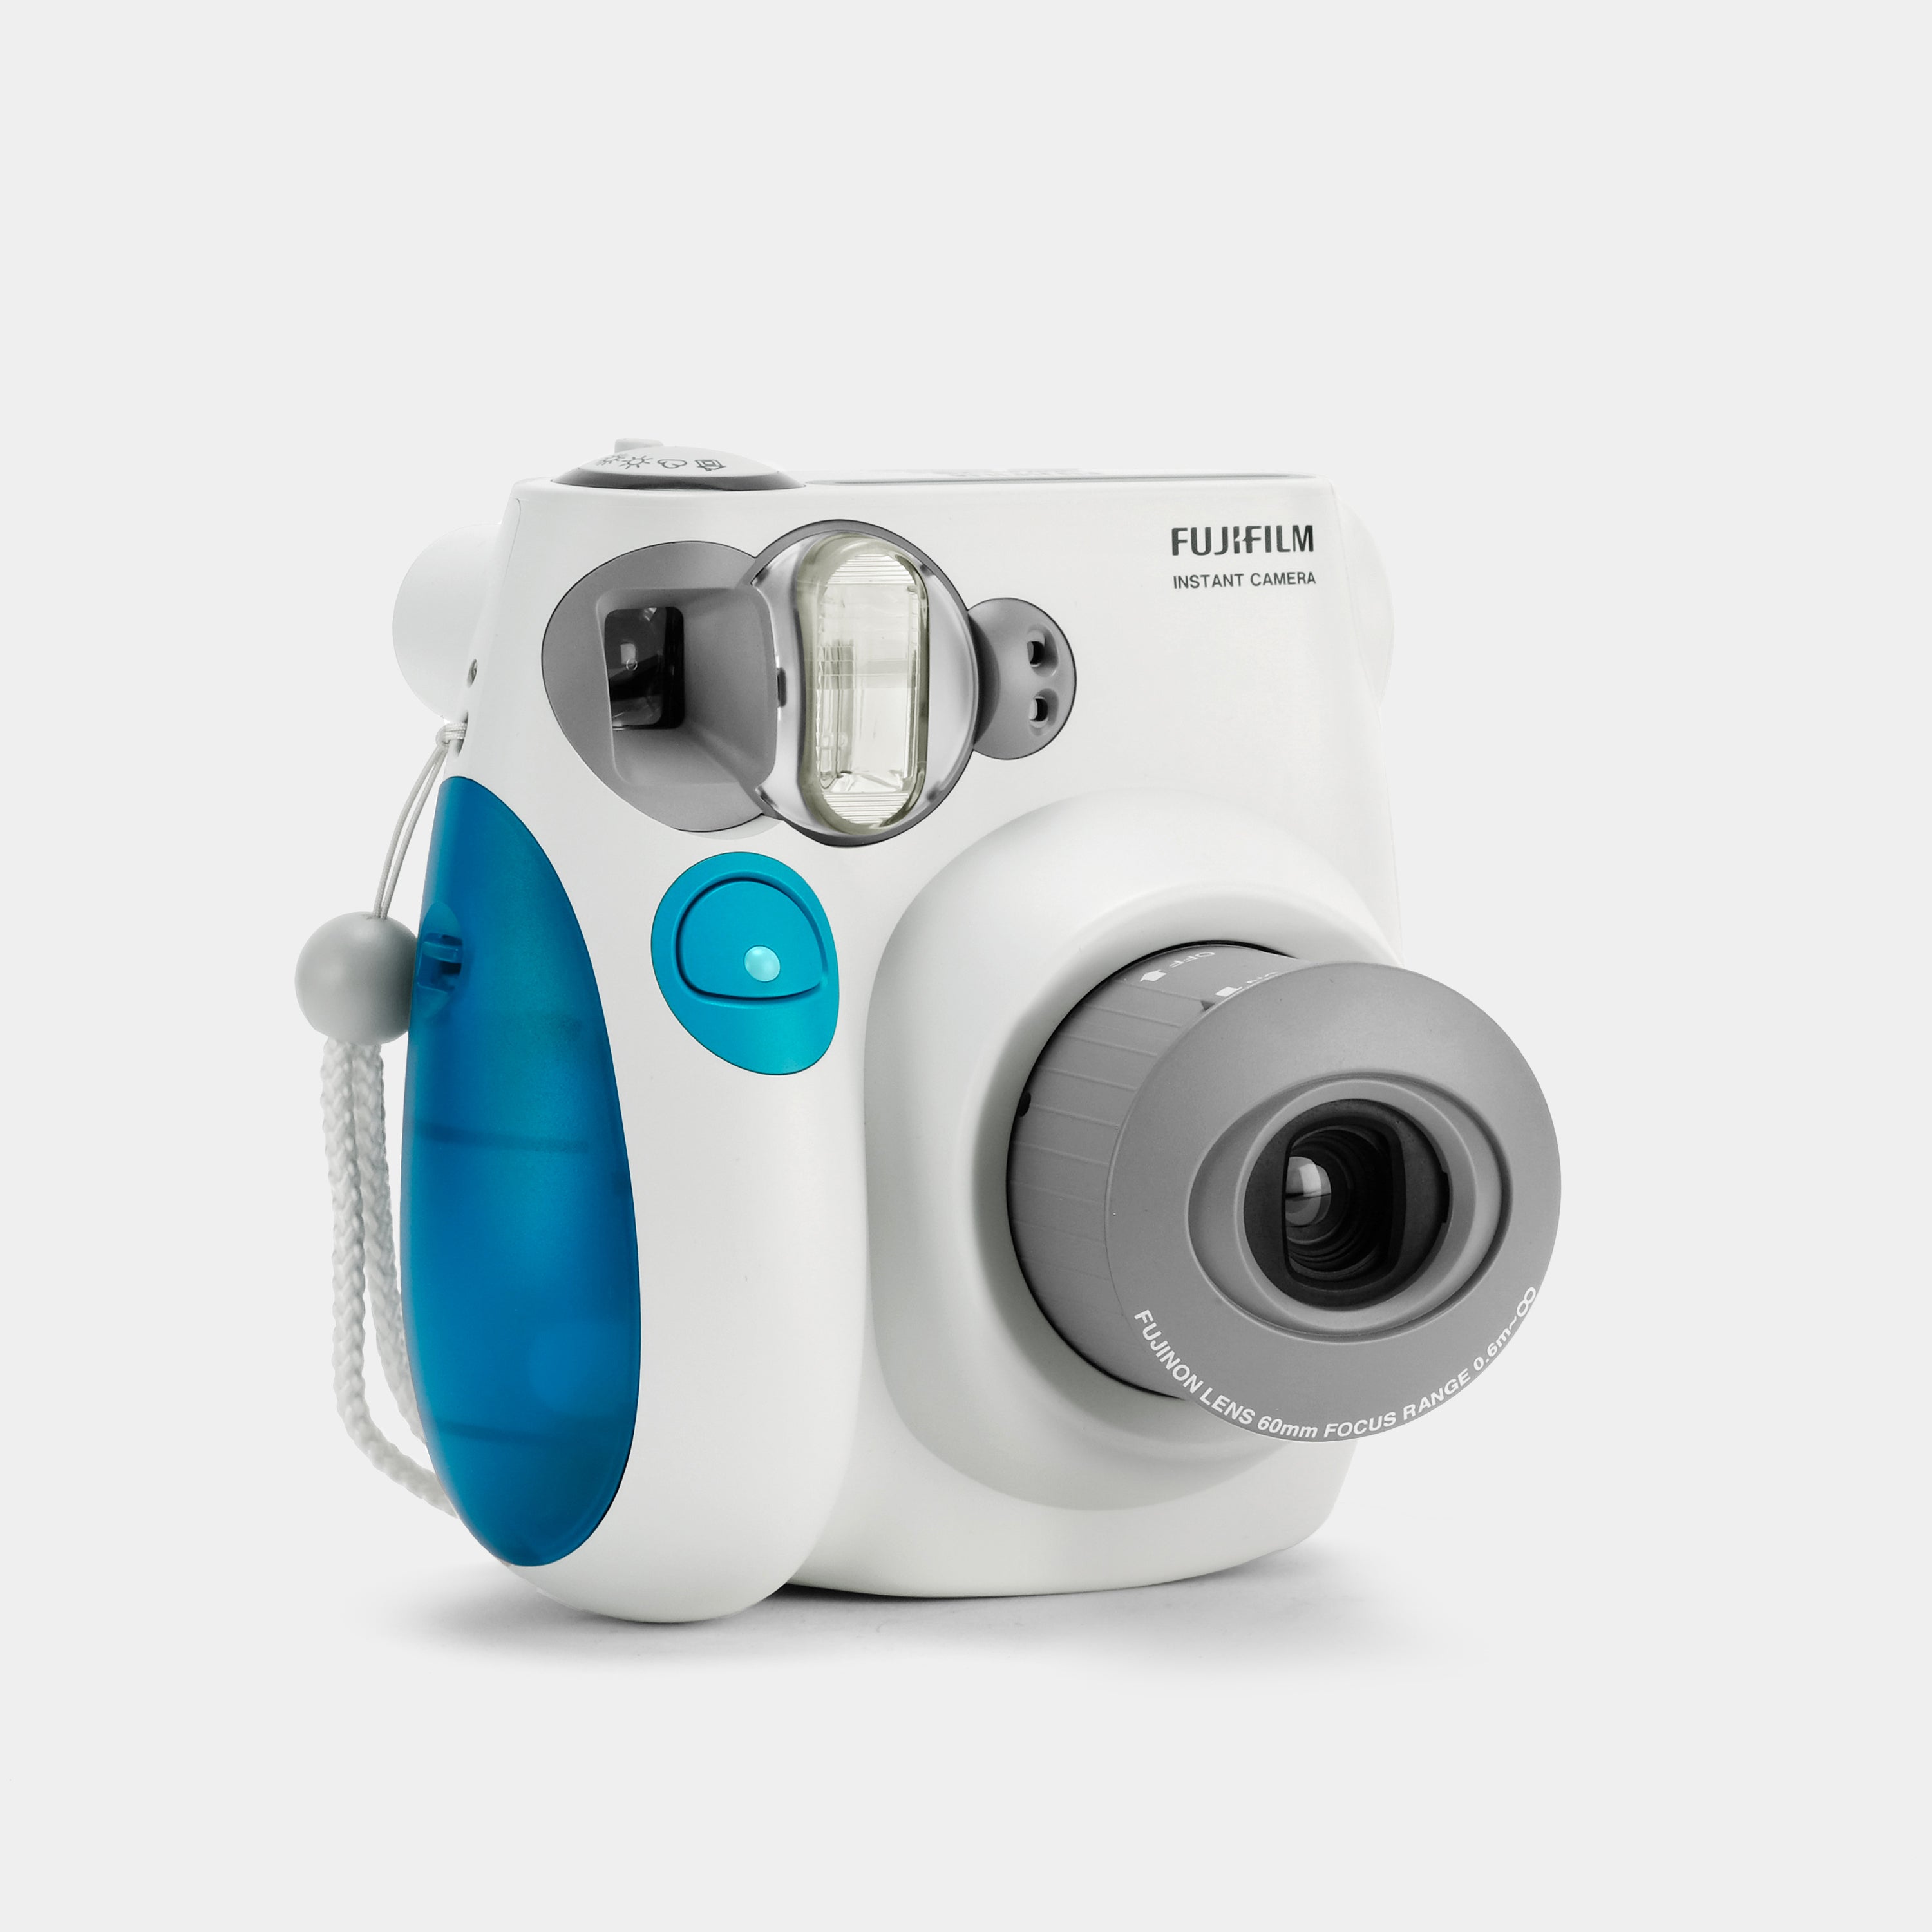 Fujifilm Instax Mini 7S White and Blue Instant Film Camera - Refurbished